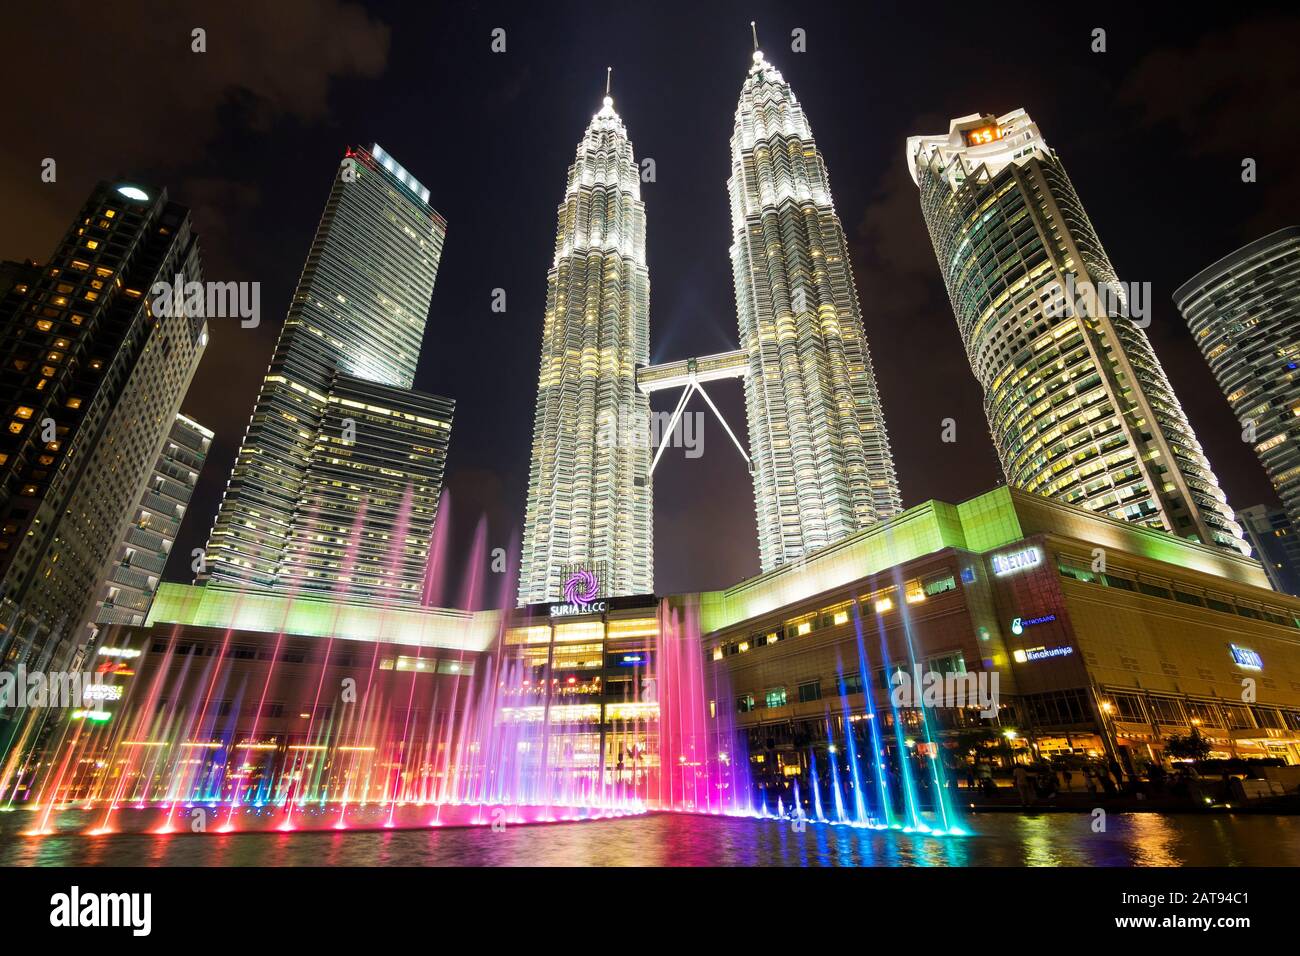 View of famous Petronas Towers at night in Kuala Lumpur, Malaysia. Stock Photo